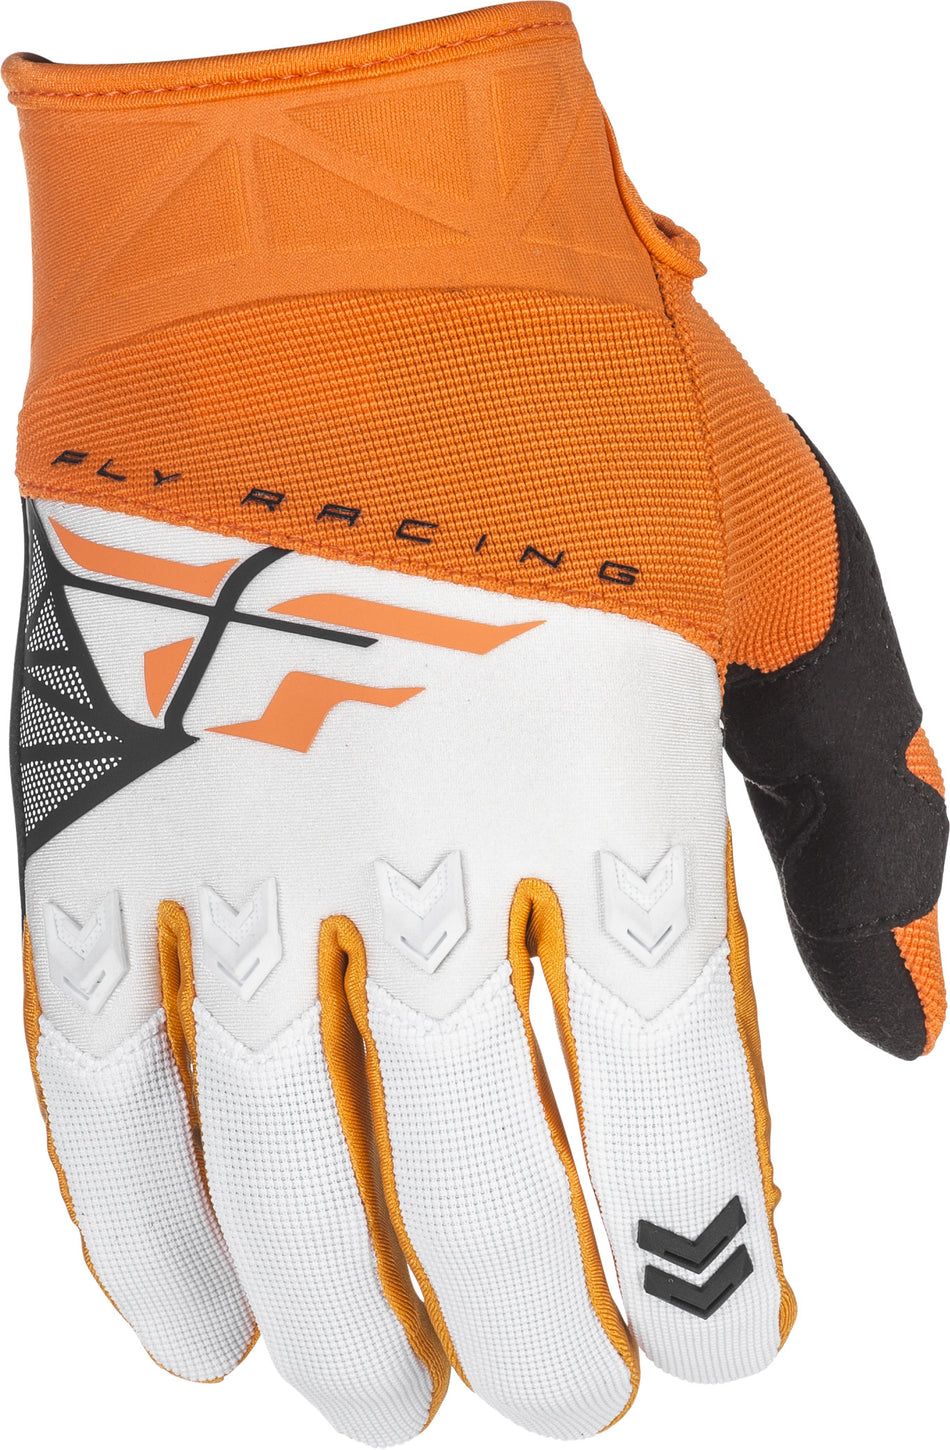 FLY RACING F-16 Gloves Orange/White Sz 13 371-91813